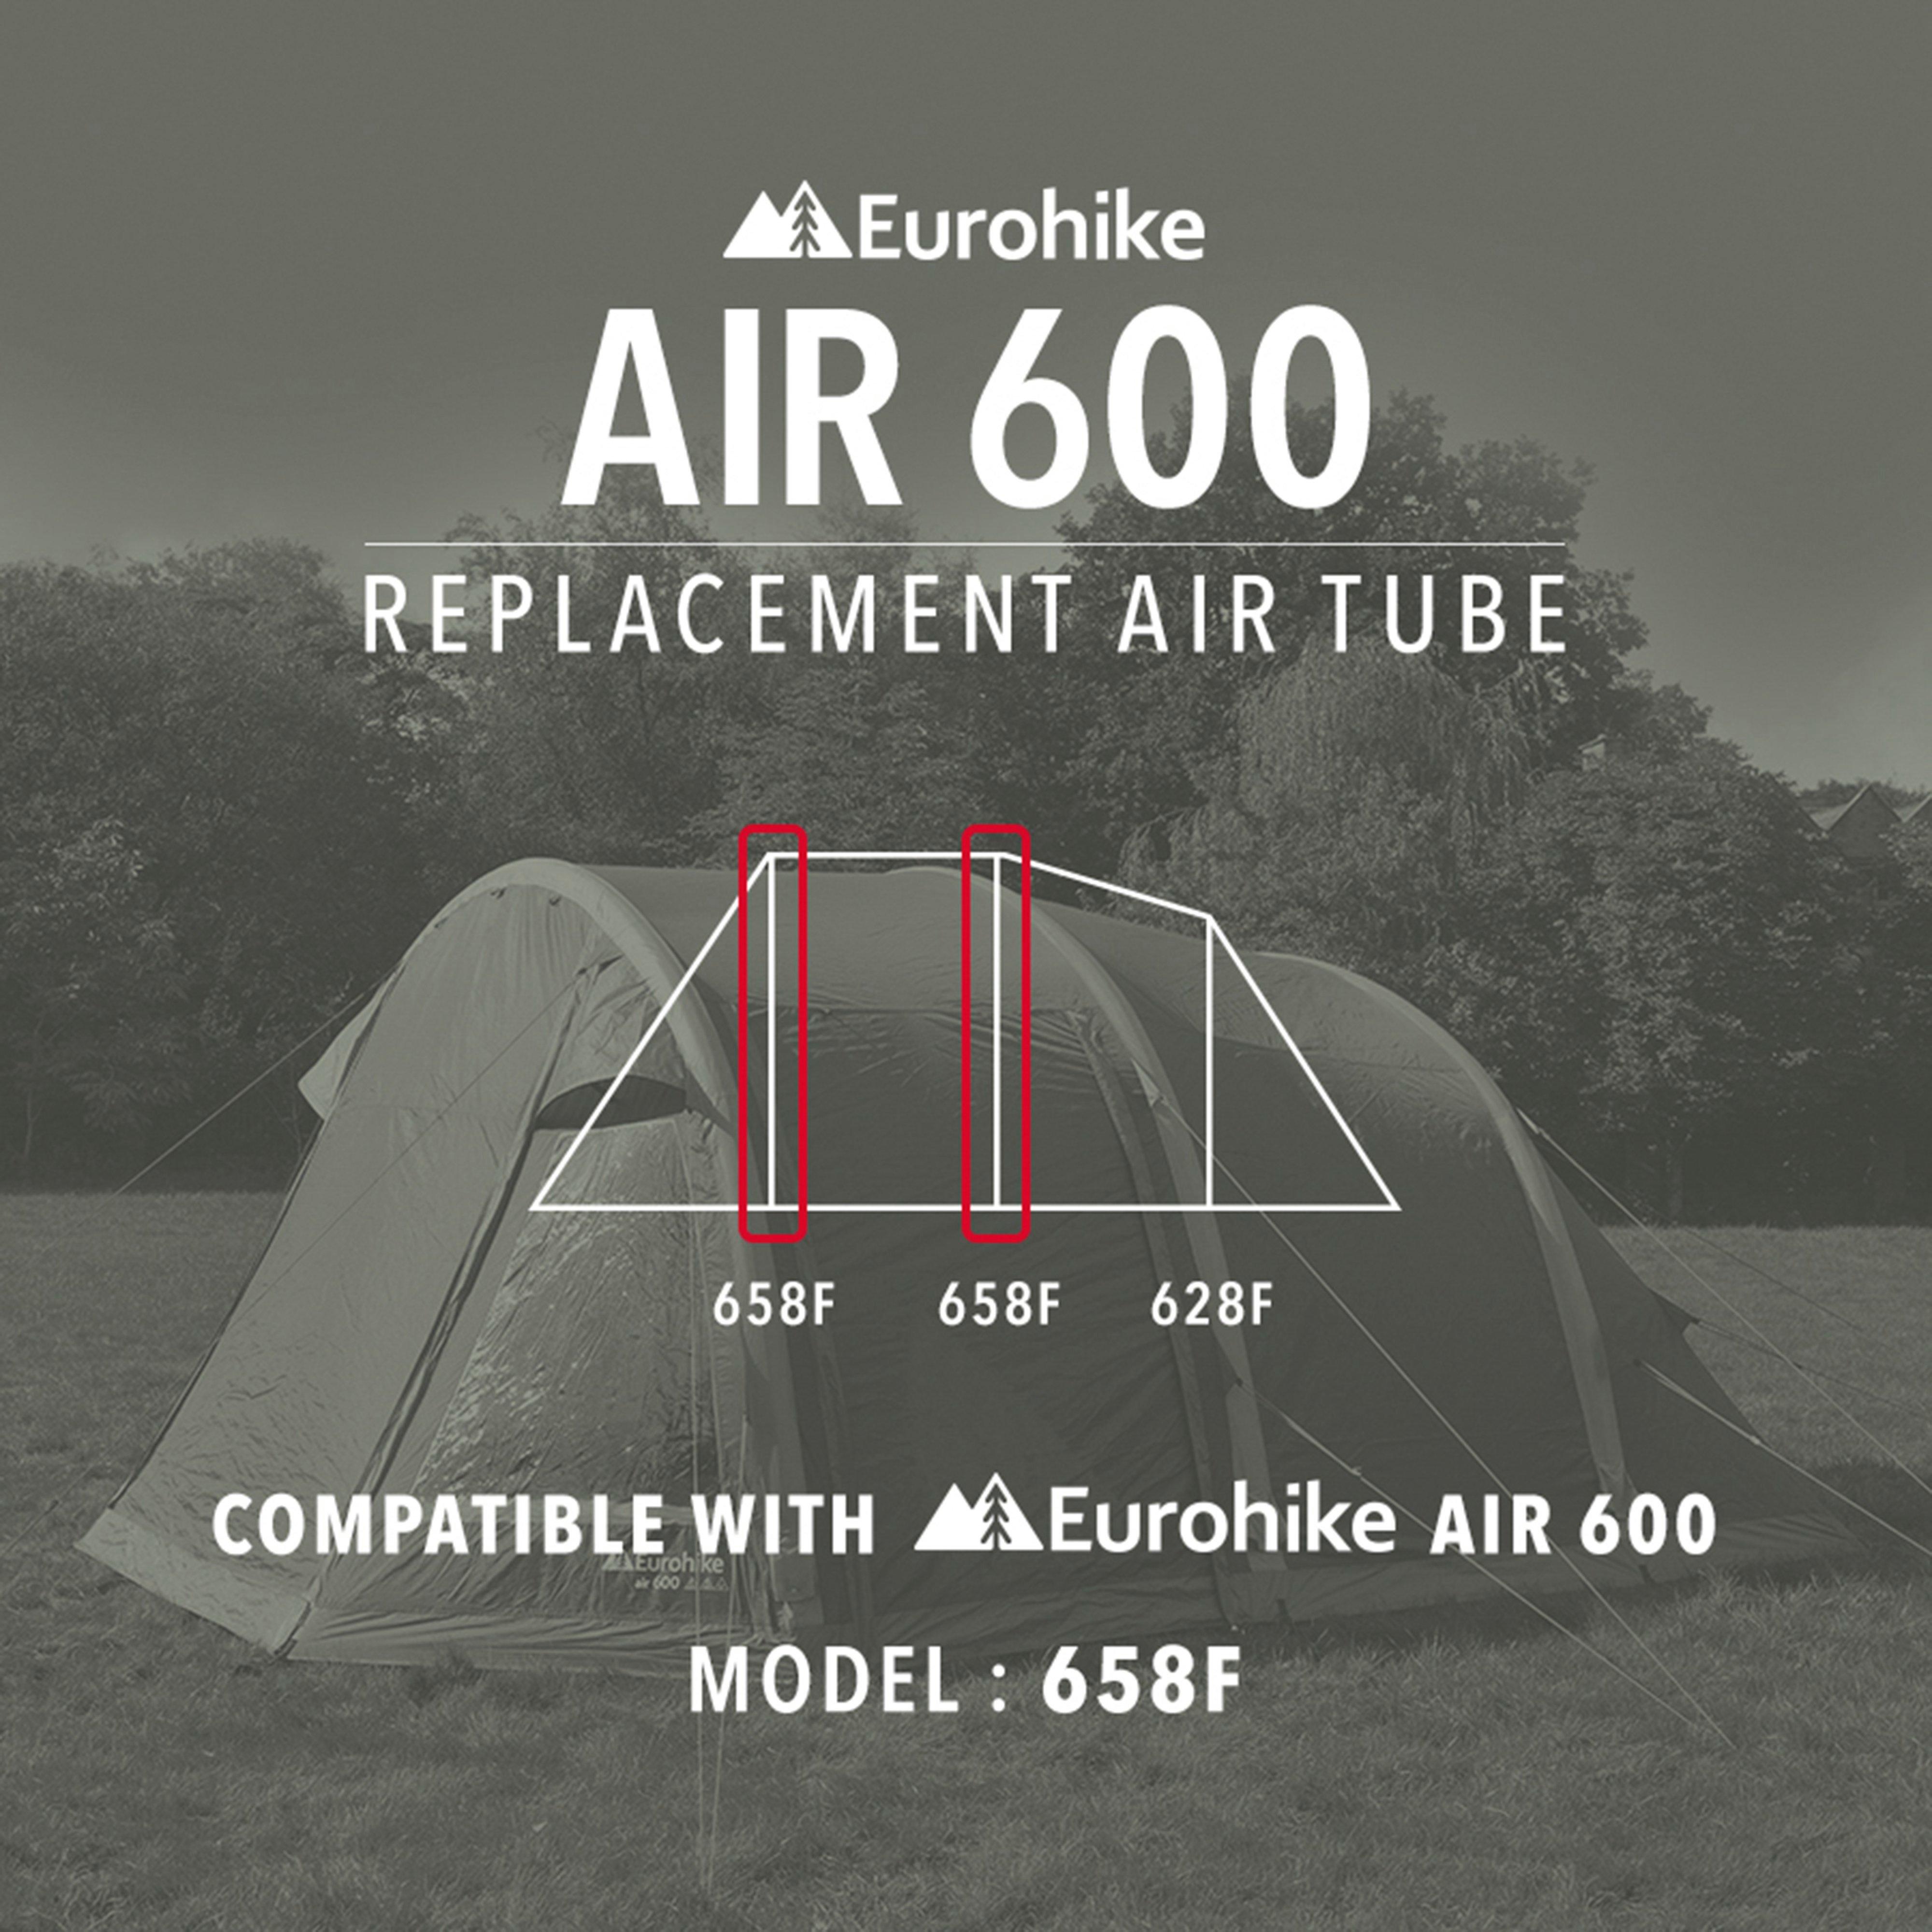 Eurohike Air 600 Replacement 658f Air Tube